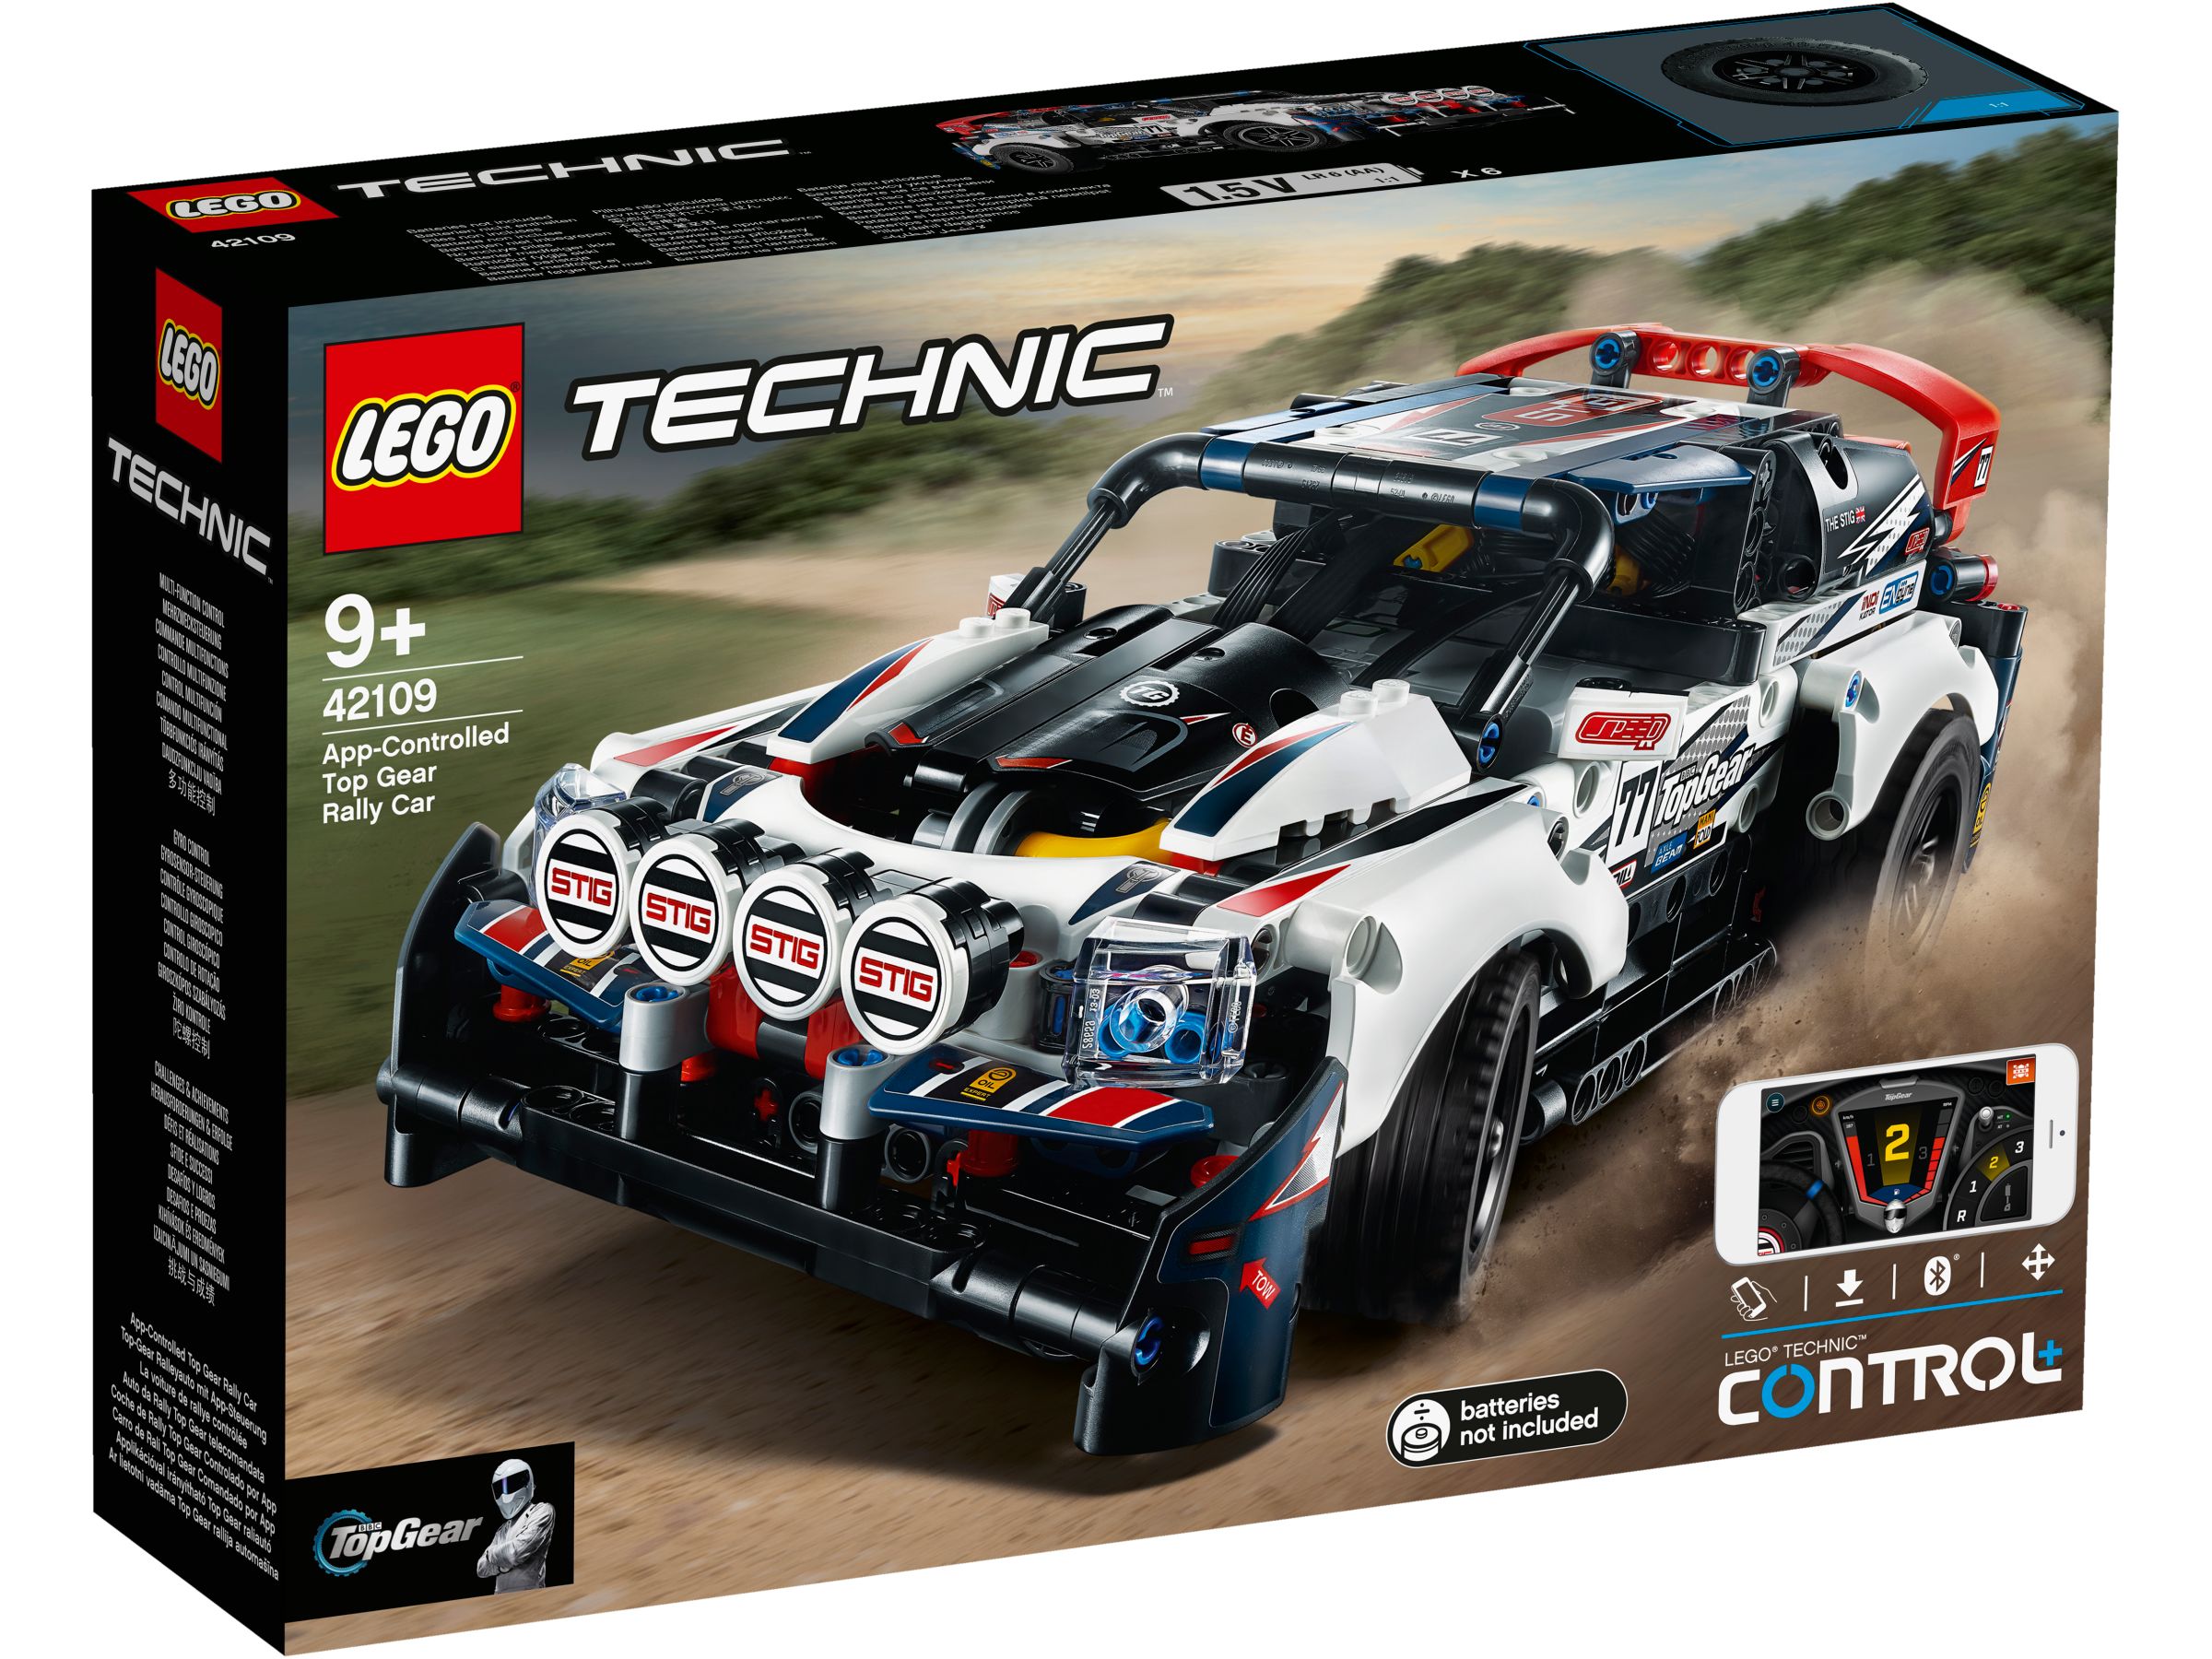 LEGO Technic 42109 Top-Gear Ralleyauto mit App-Steuerung LEGO_42109_alt1.jpg